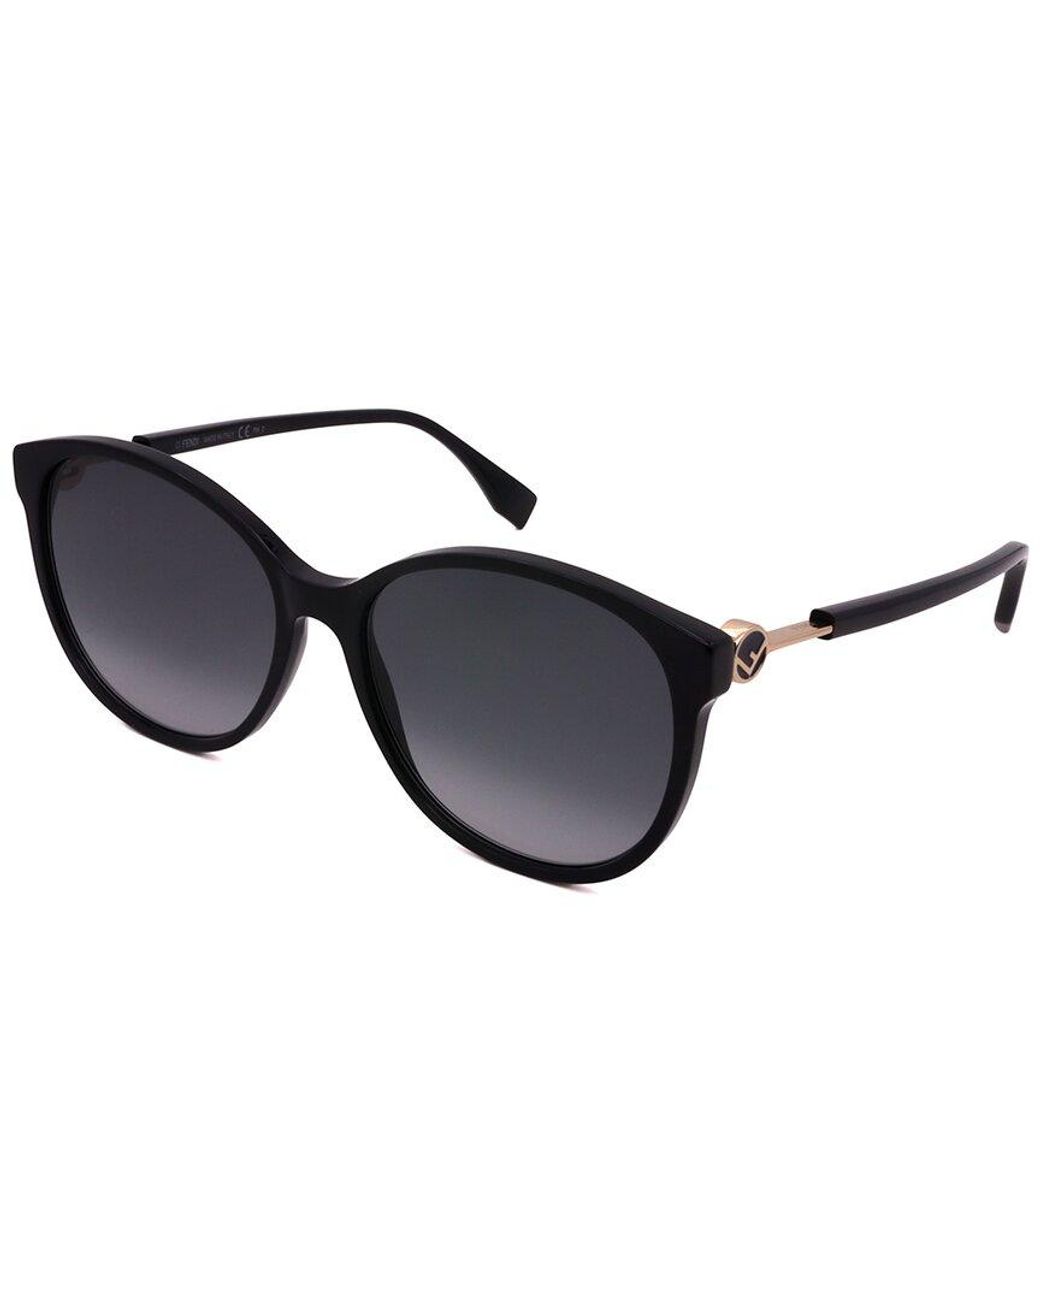 Womens 50 mm Black Gold Sunglasses by Fendi 762753637031